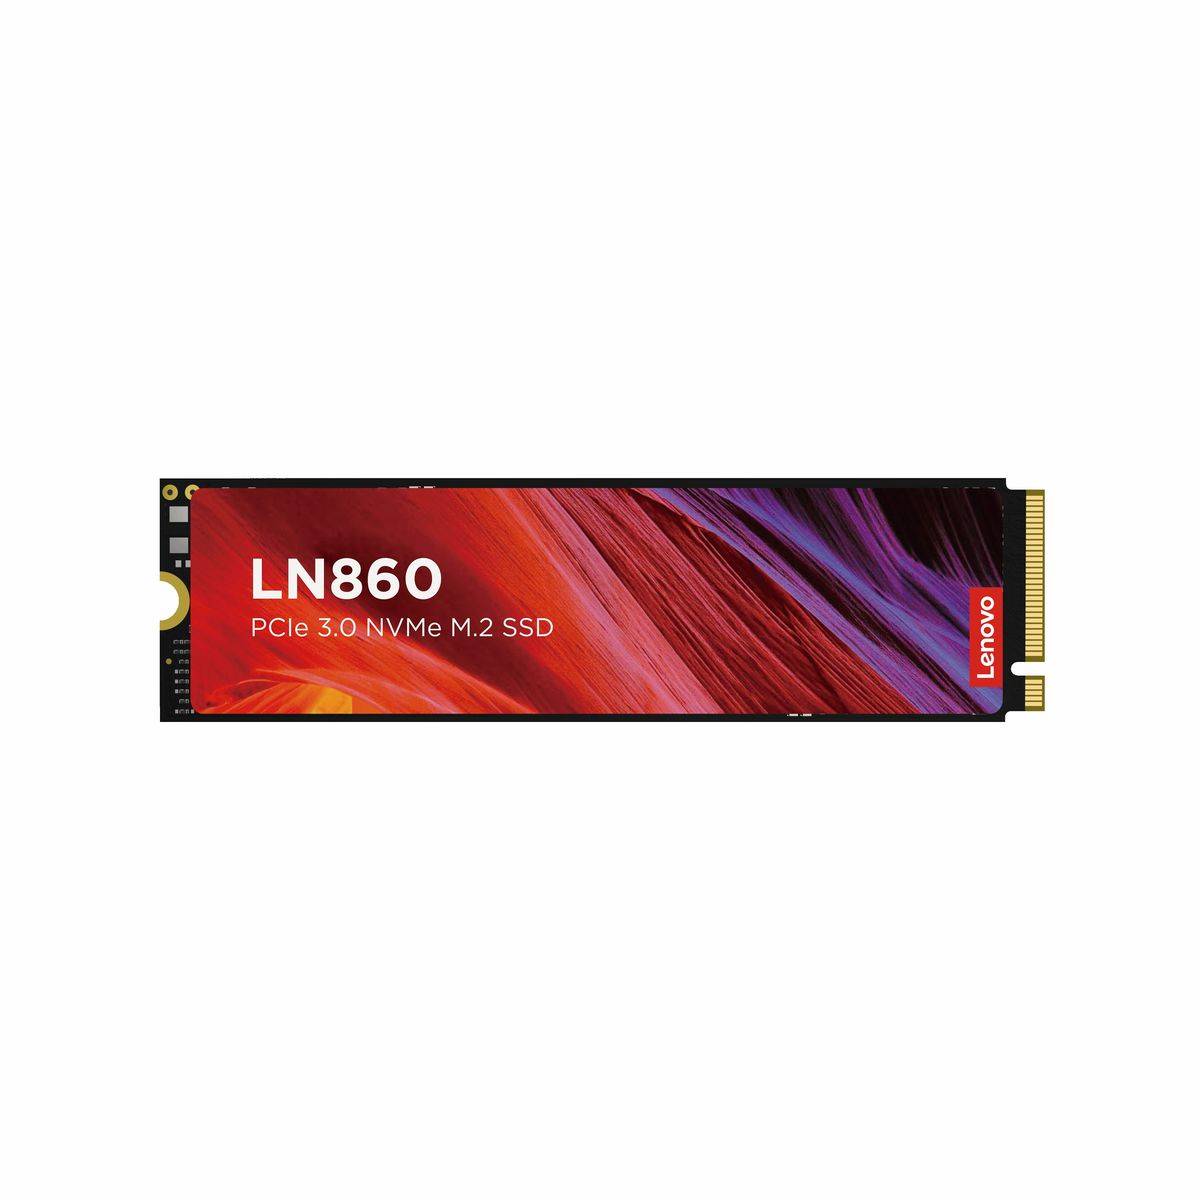 Unidad Ssd Lenovo Ln860 256Gb M 2 Nvme Gen3 3400Mb S  5Sd1N53084  - LENOVO